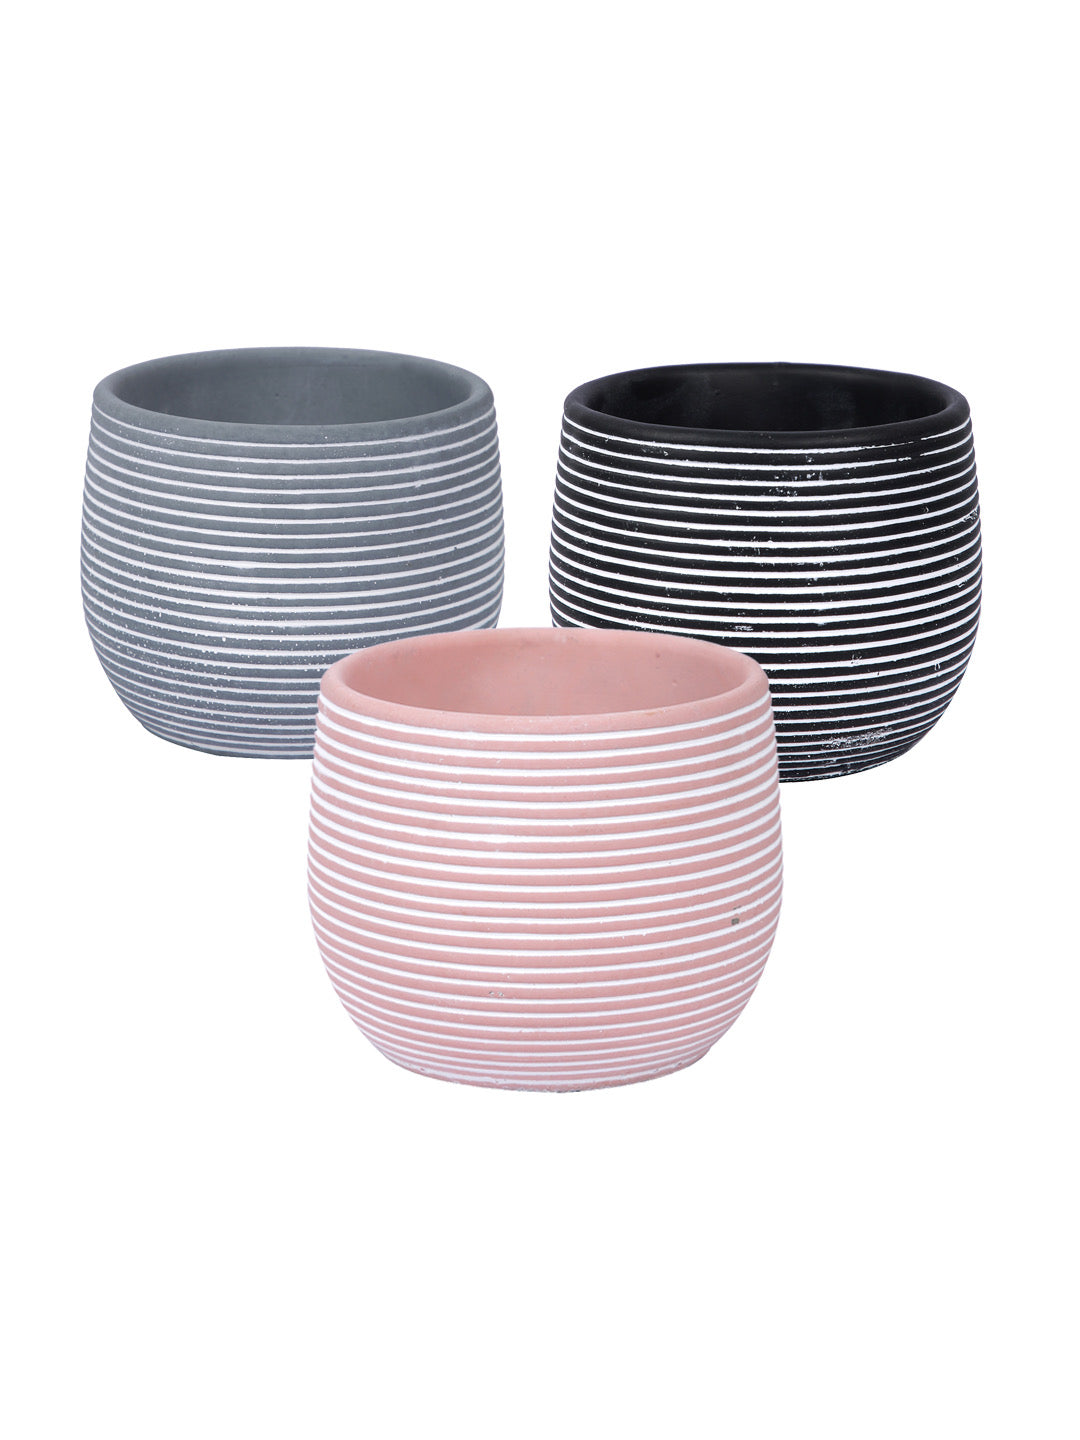 Spiral Texture Ceramic Planter Set of 3 - Default Title (CHC22337_3)